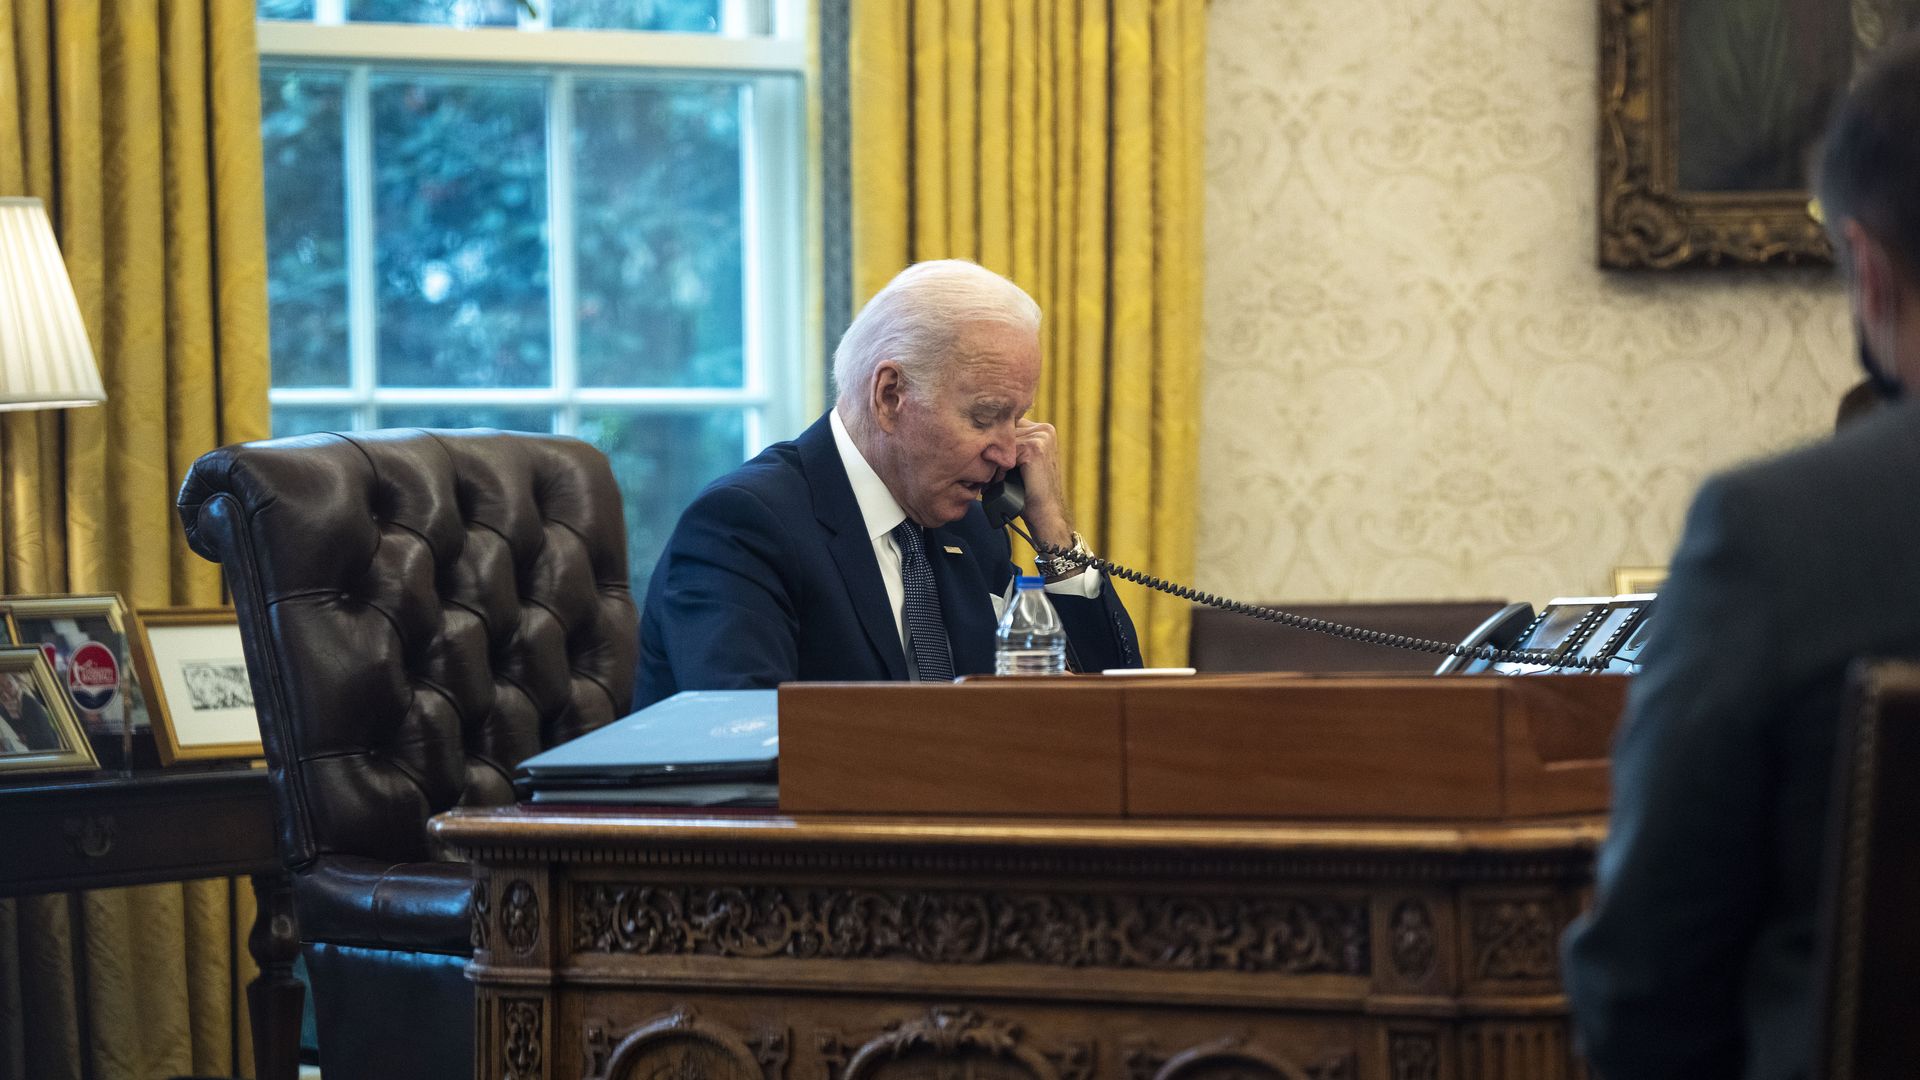 Biden speaks on the phone.